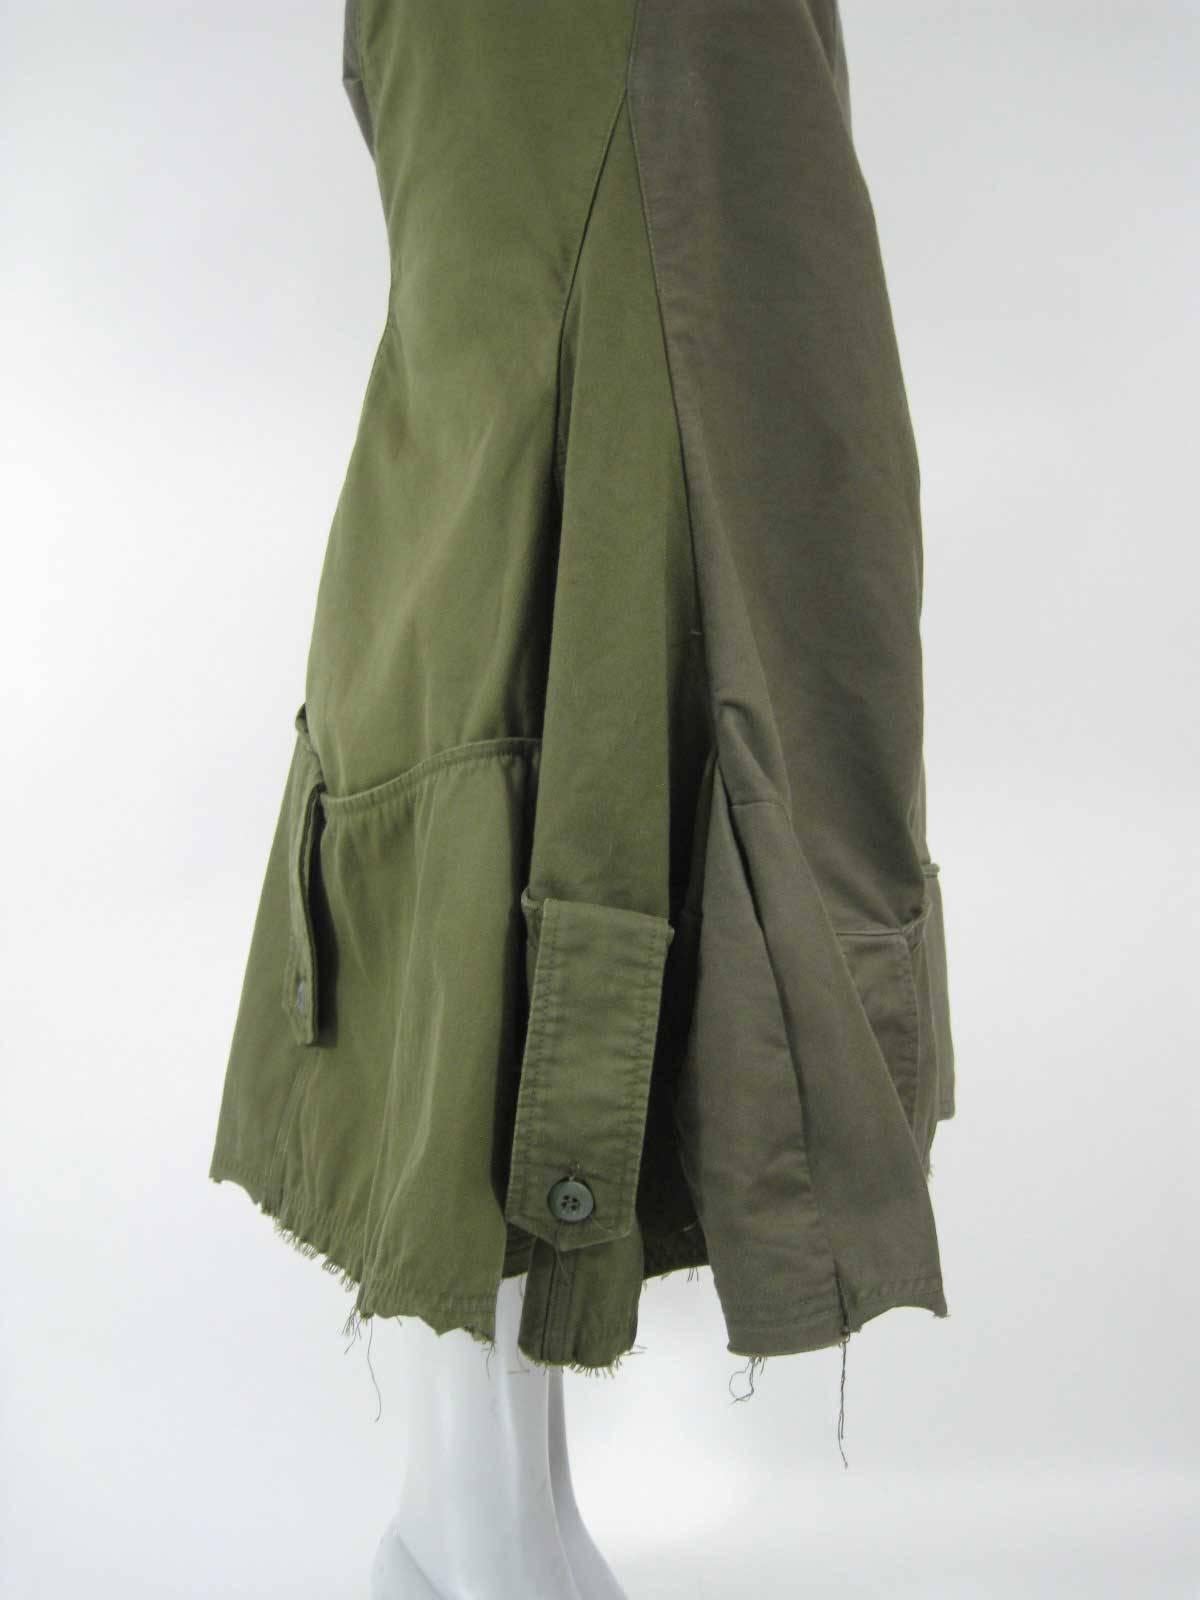 Women's Junya Watanabe Commes des Garcons 2006 Deconstructed Military Skirt